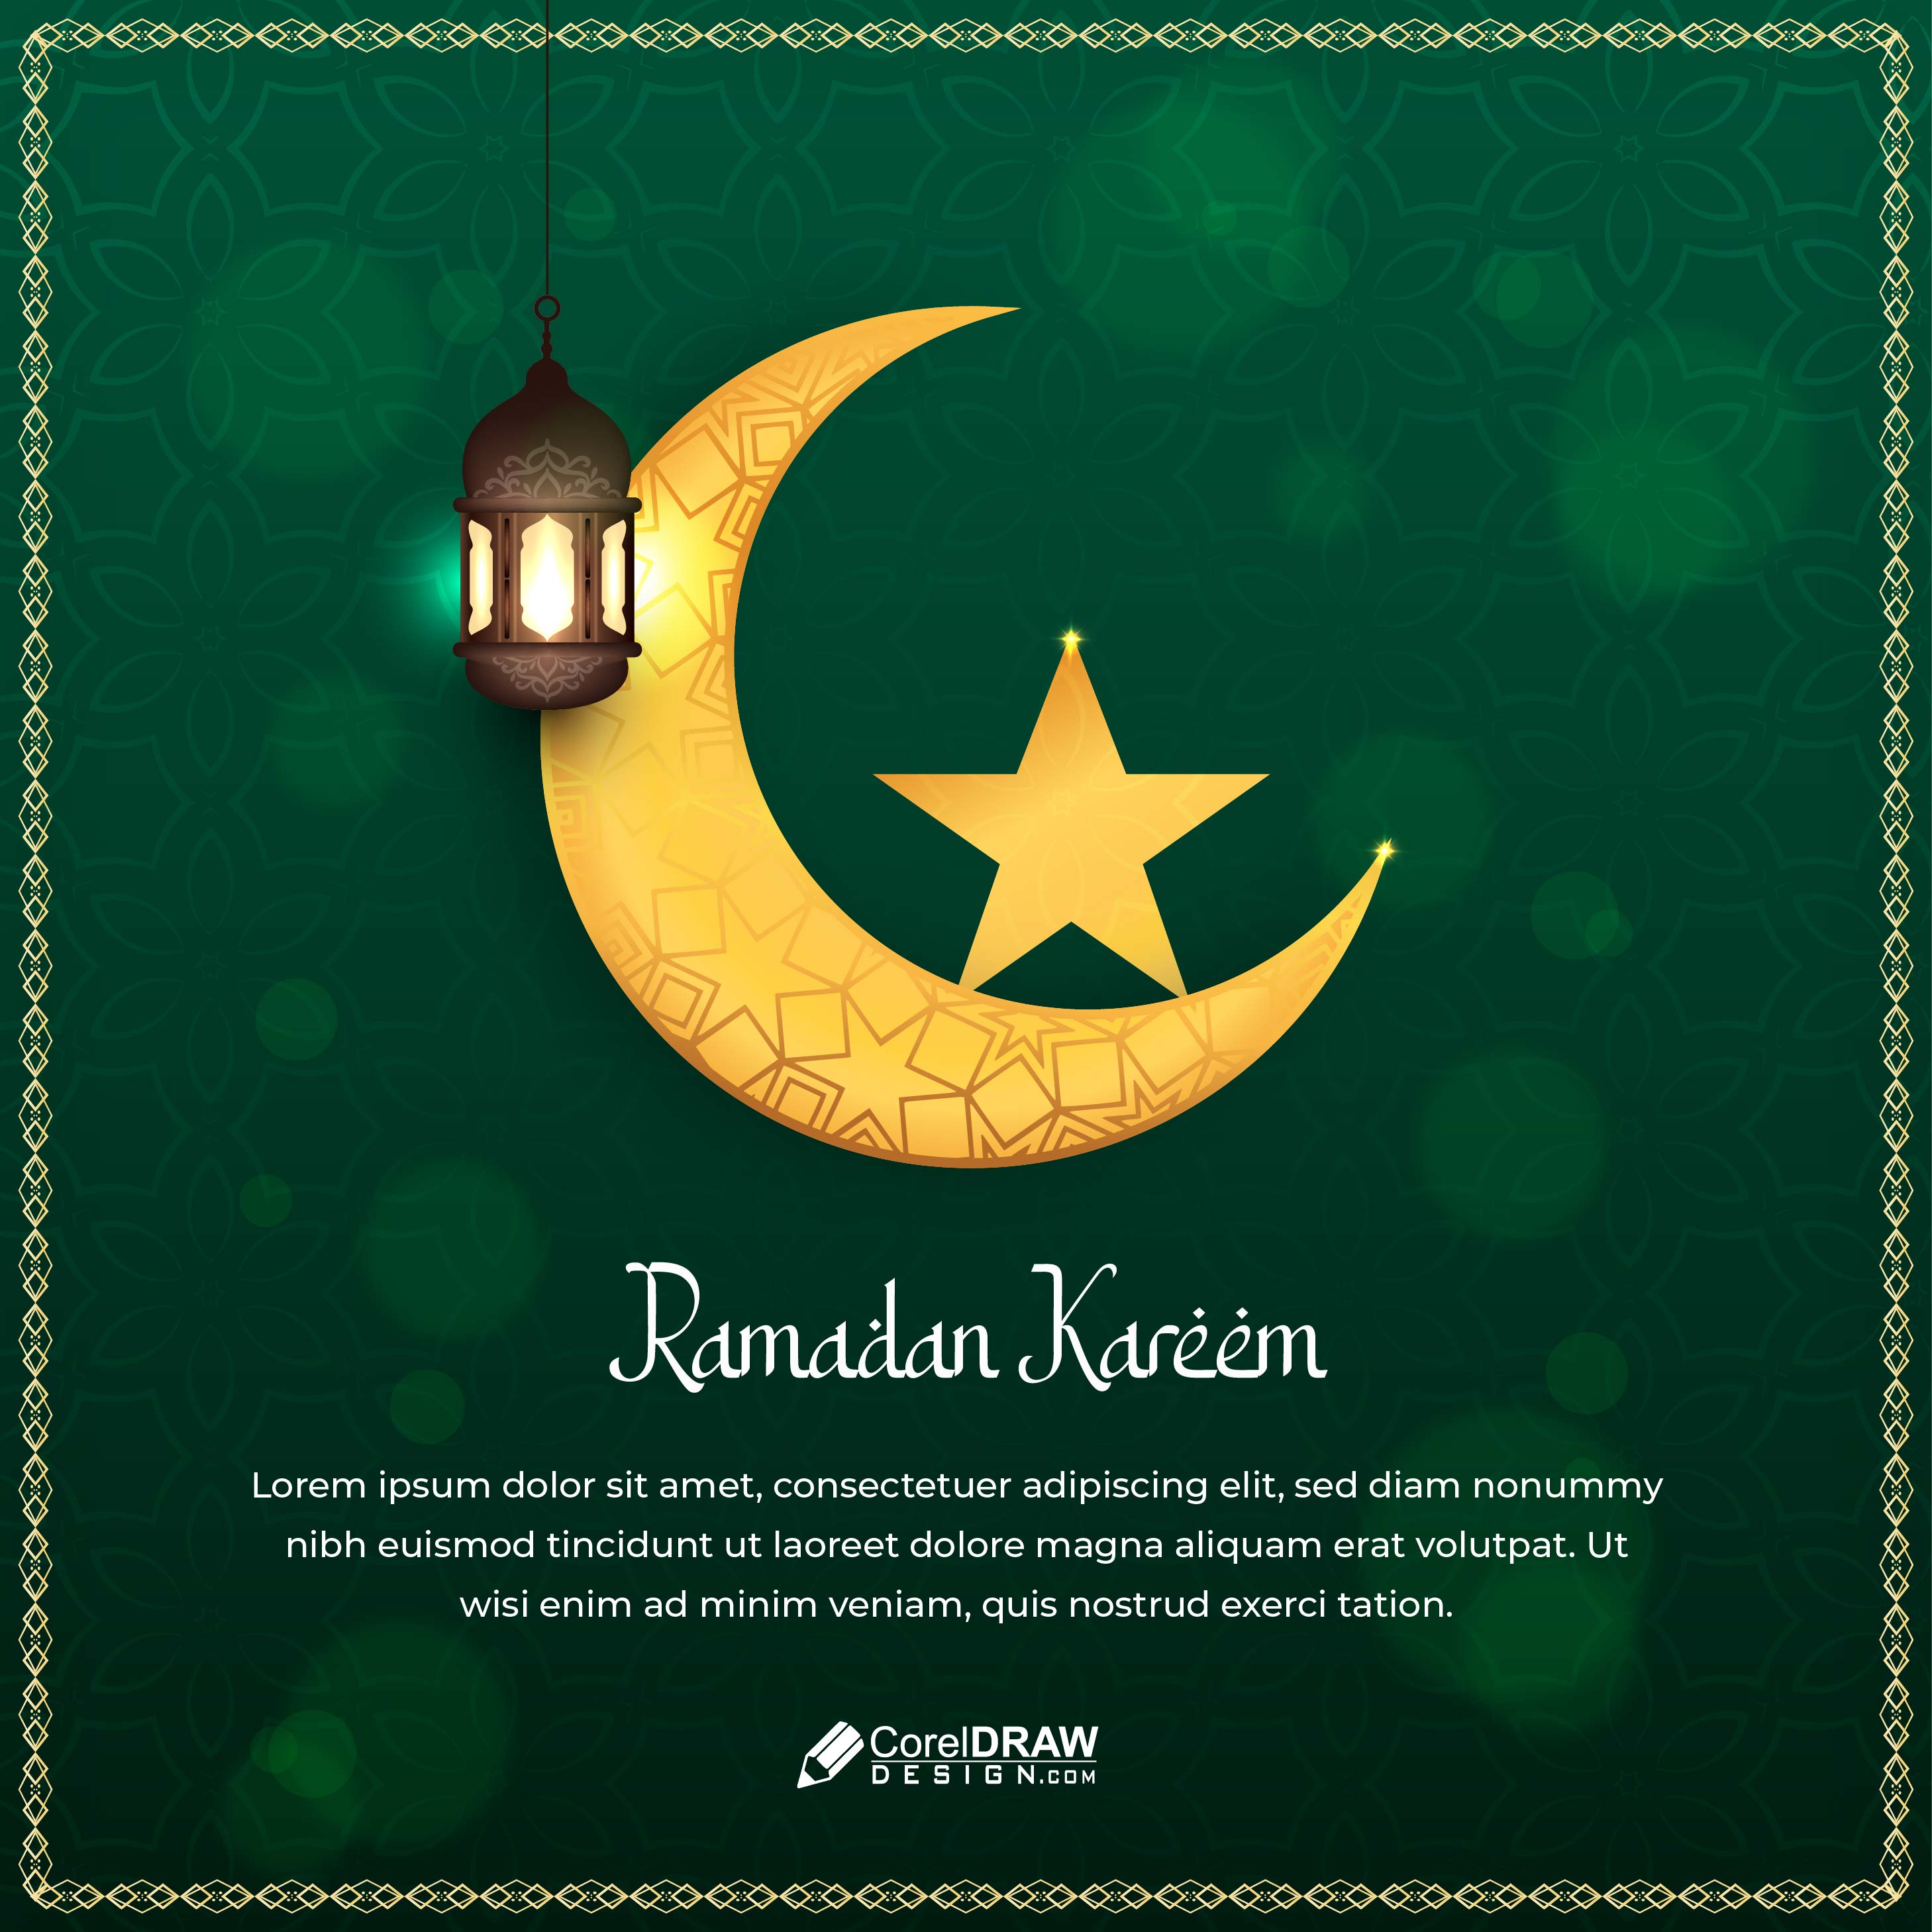 Abstract Beautiful Ramadan Kareem Wishes Background